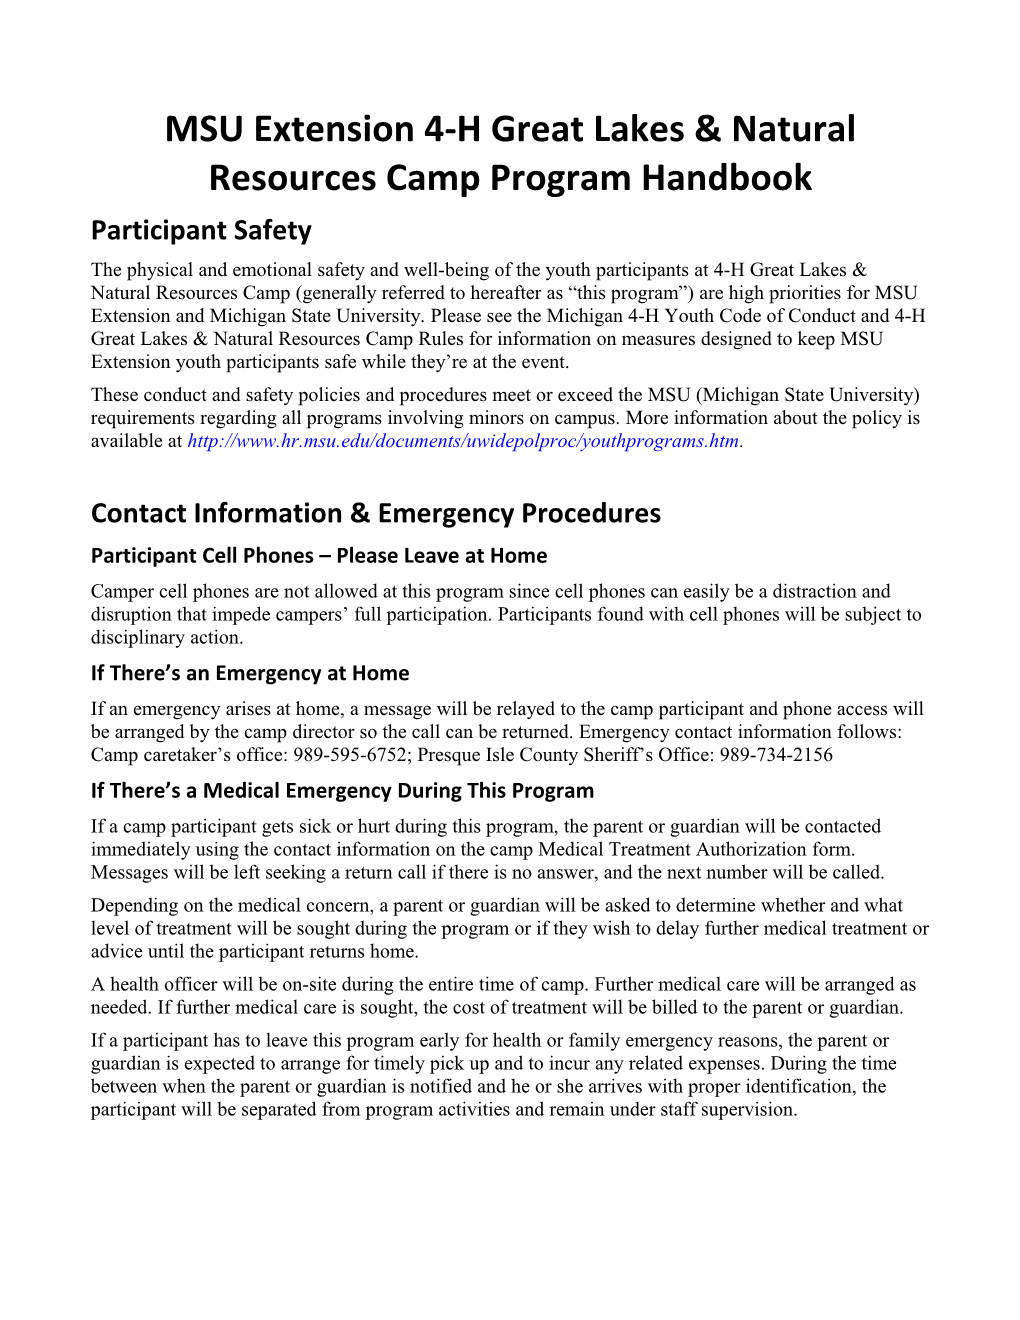 MSU Extension 4-H Great Lakes & Natural Resources Camp Program Handbook